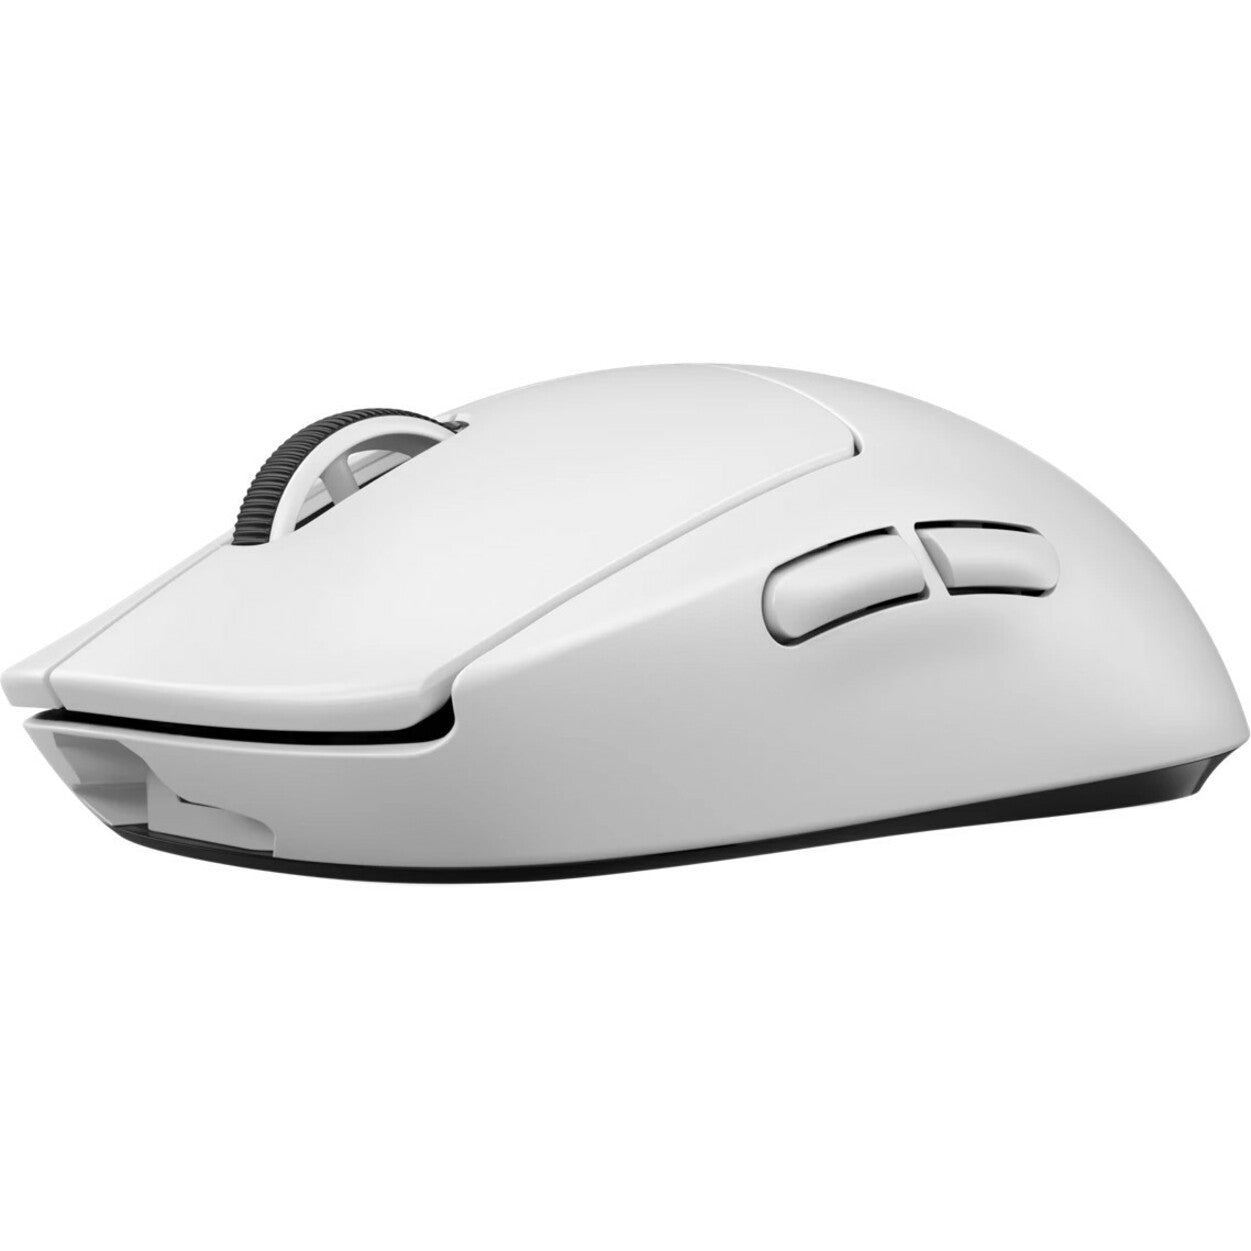 Logitech's Lightest Wireless Gaming Mouse (The G Pro X Superlight